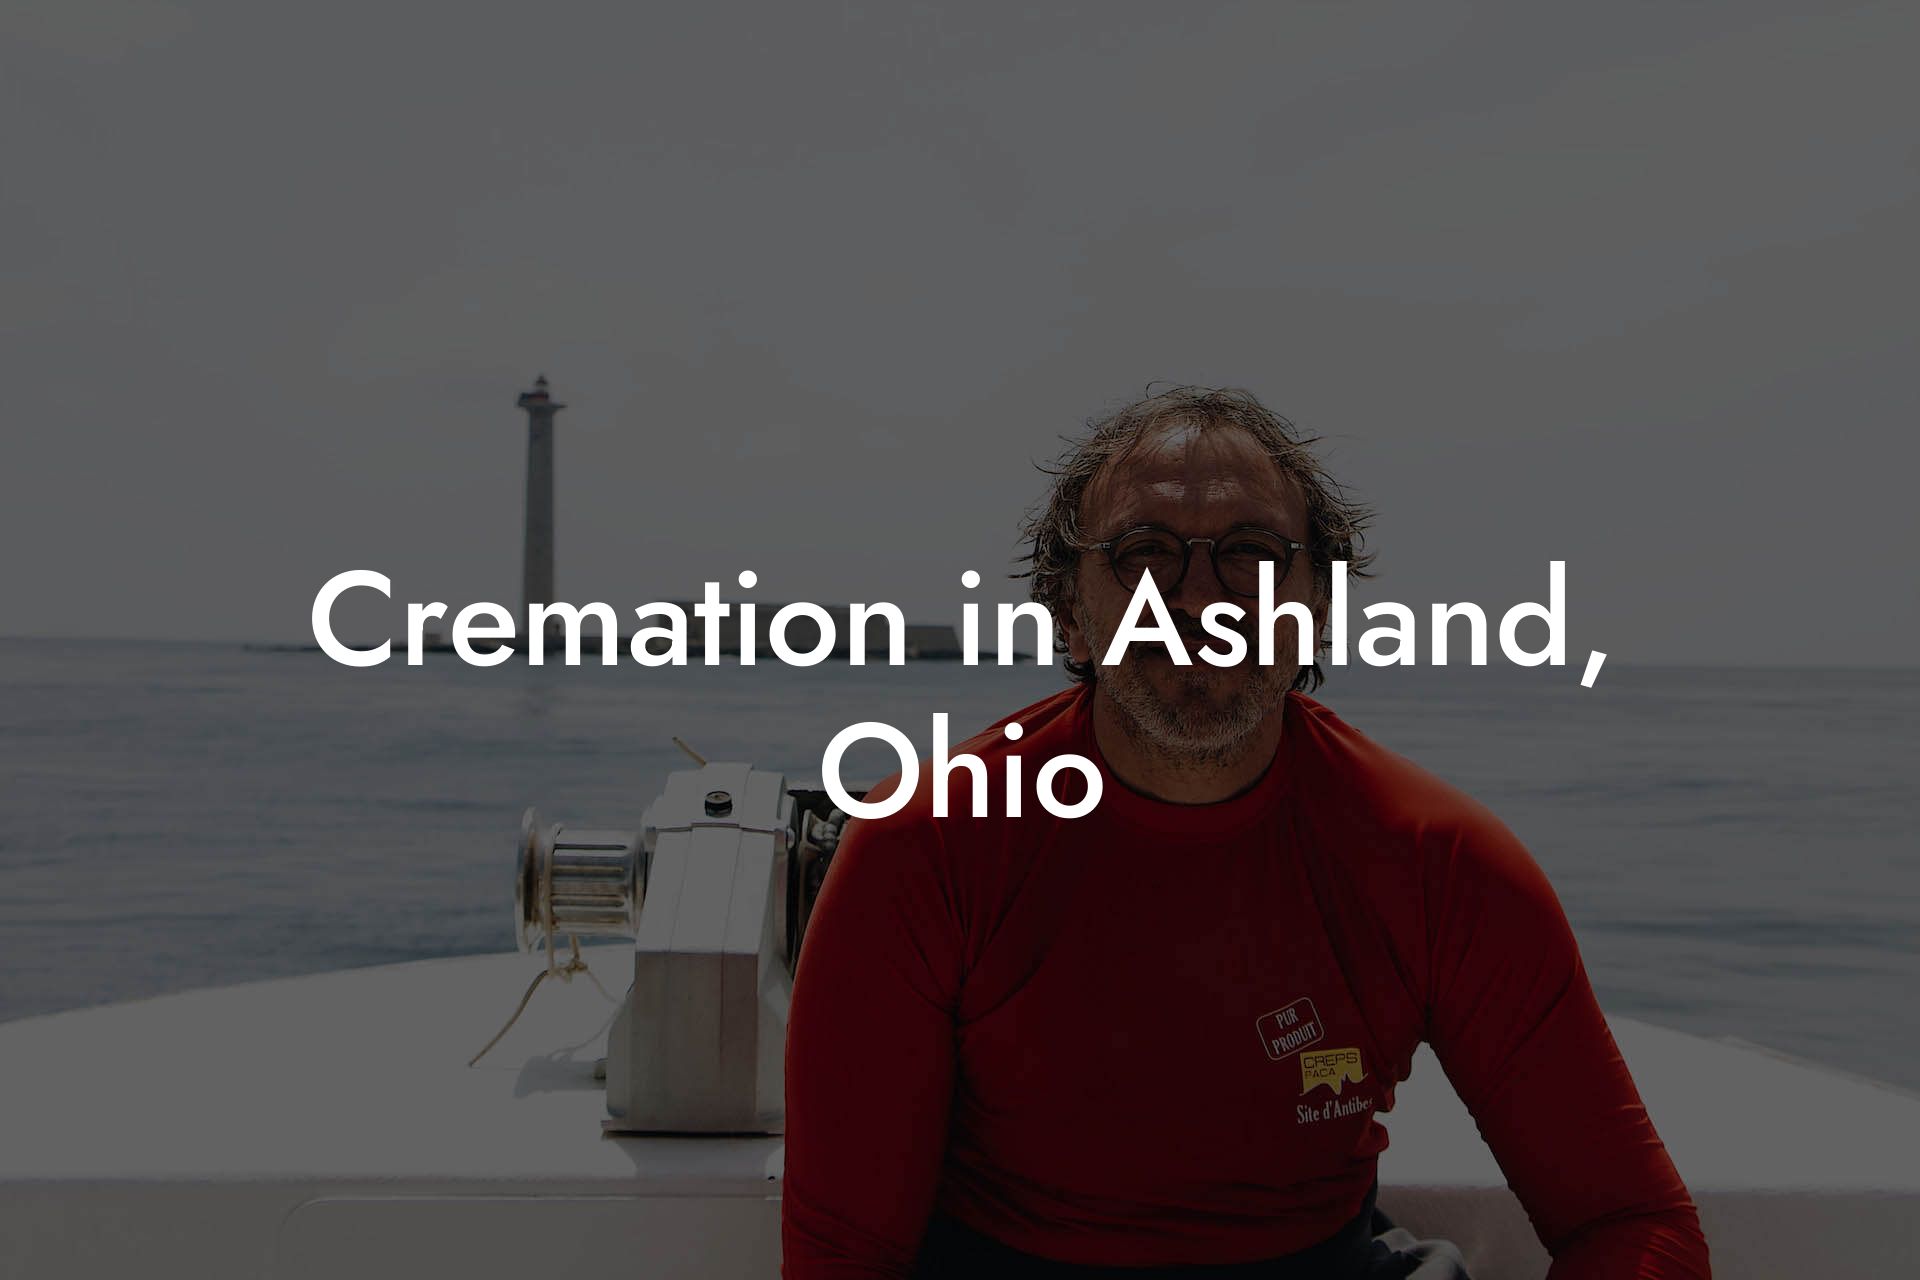 Cremation in Ashland, Ohio